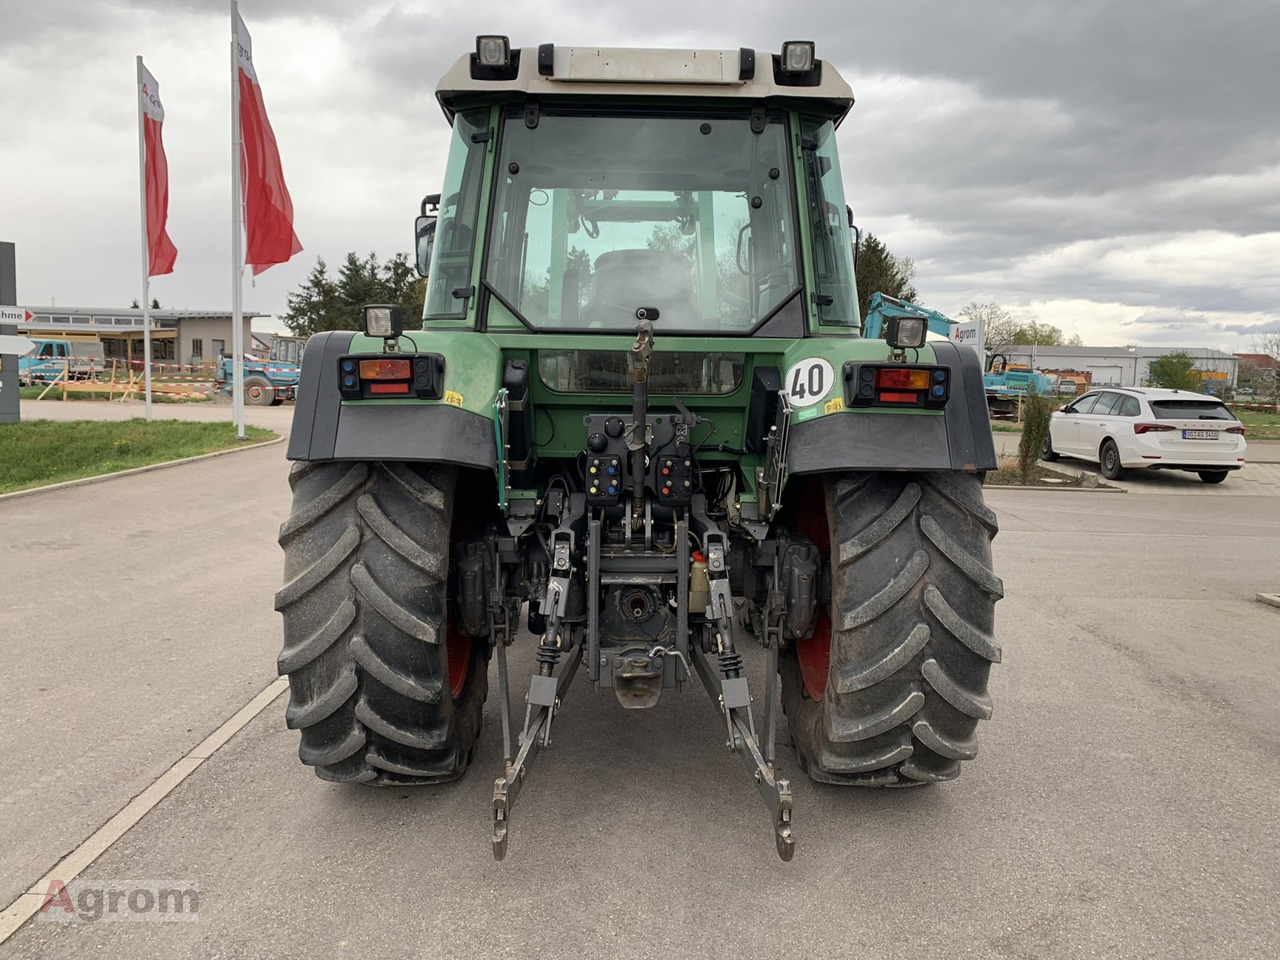 Fendt Favorit 512 Traktor in Deutschland - Leasing Angebot